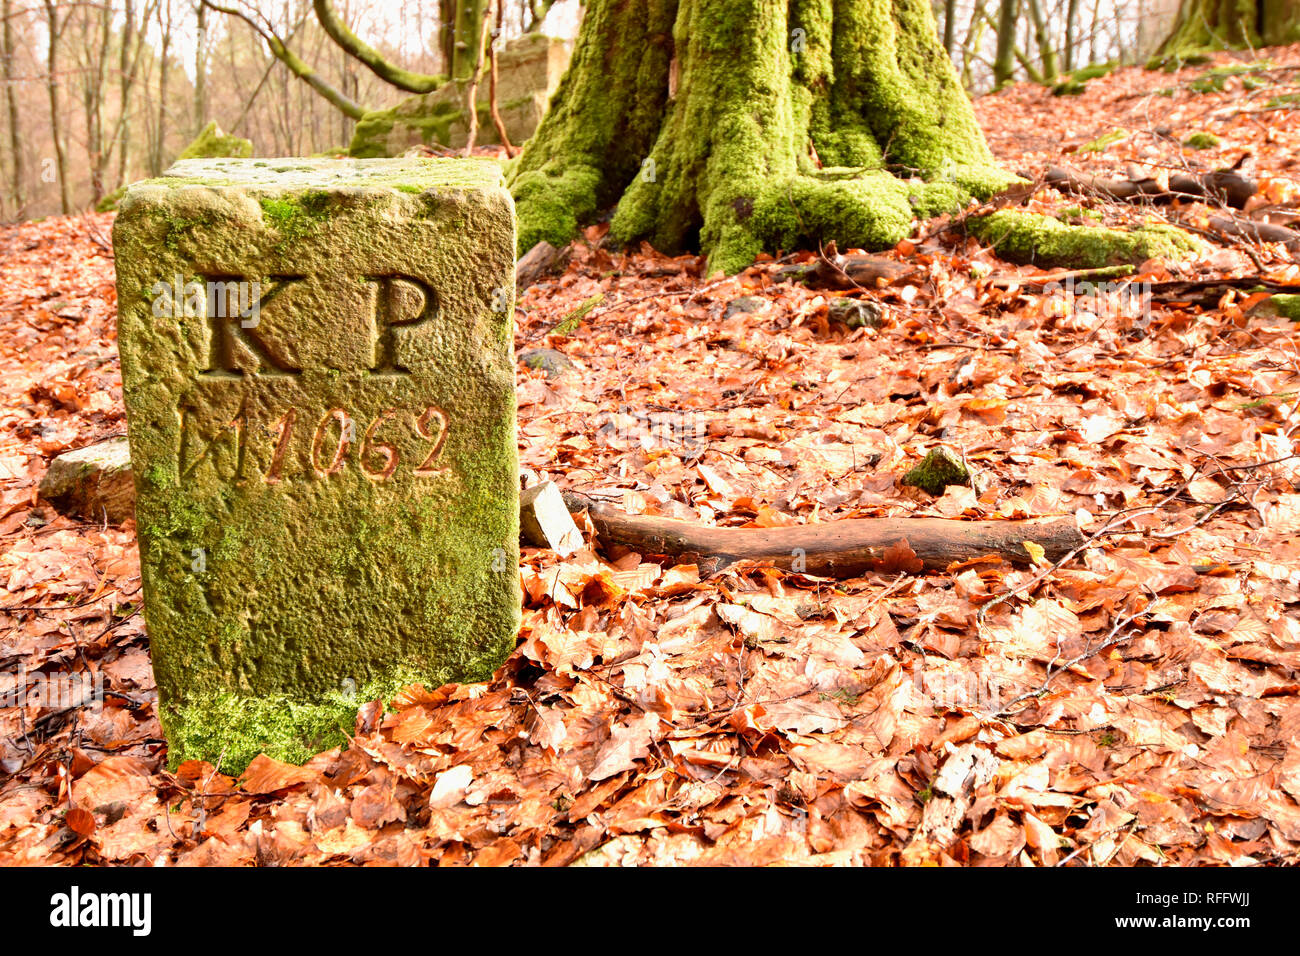 historical border stone, Wildenburger Kopf, Hunsrueck-Hochwald National Park, Germany, Rhineland-Palatinate Stock Photo